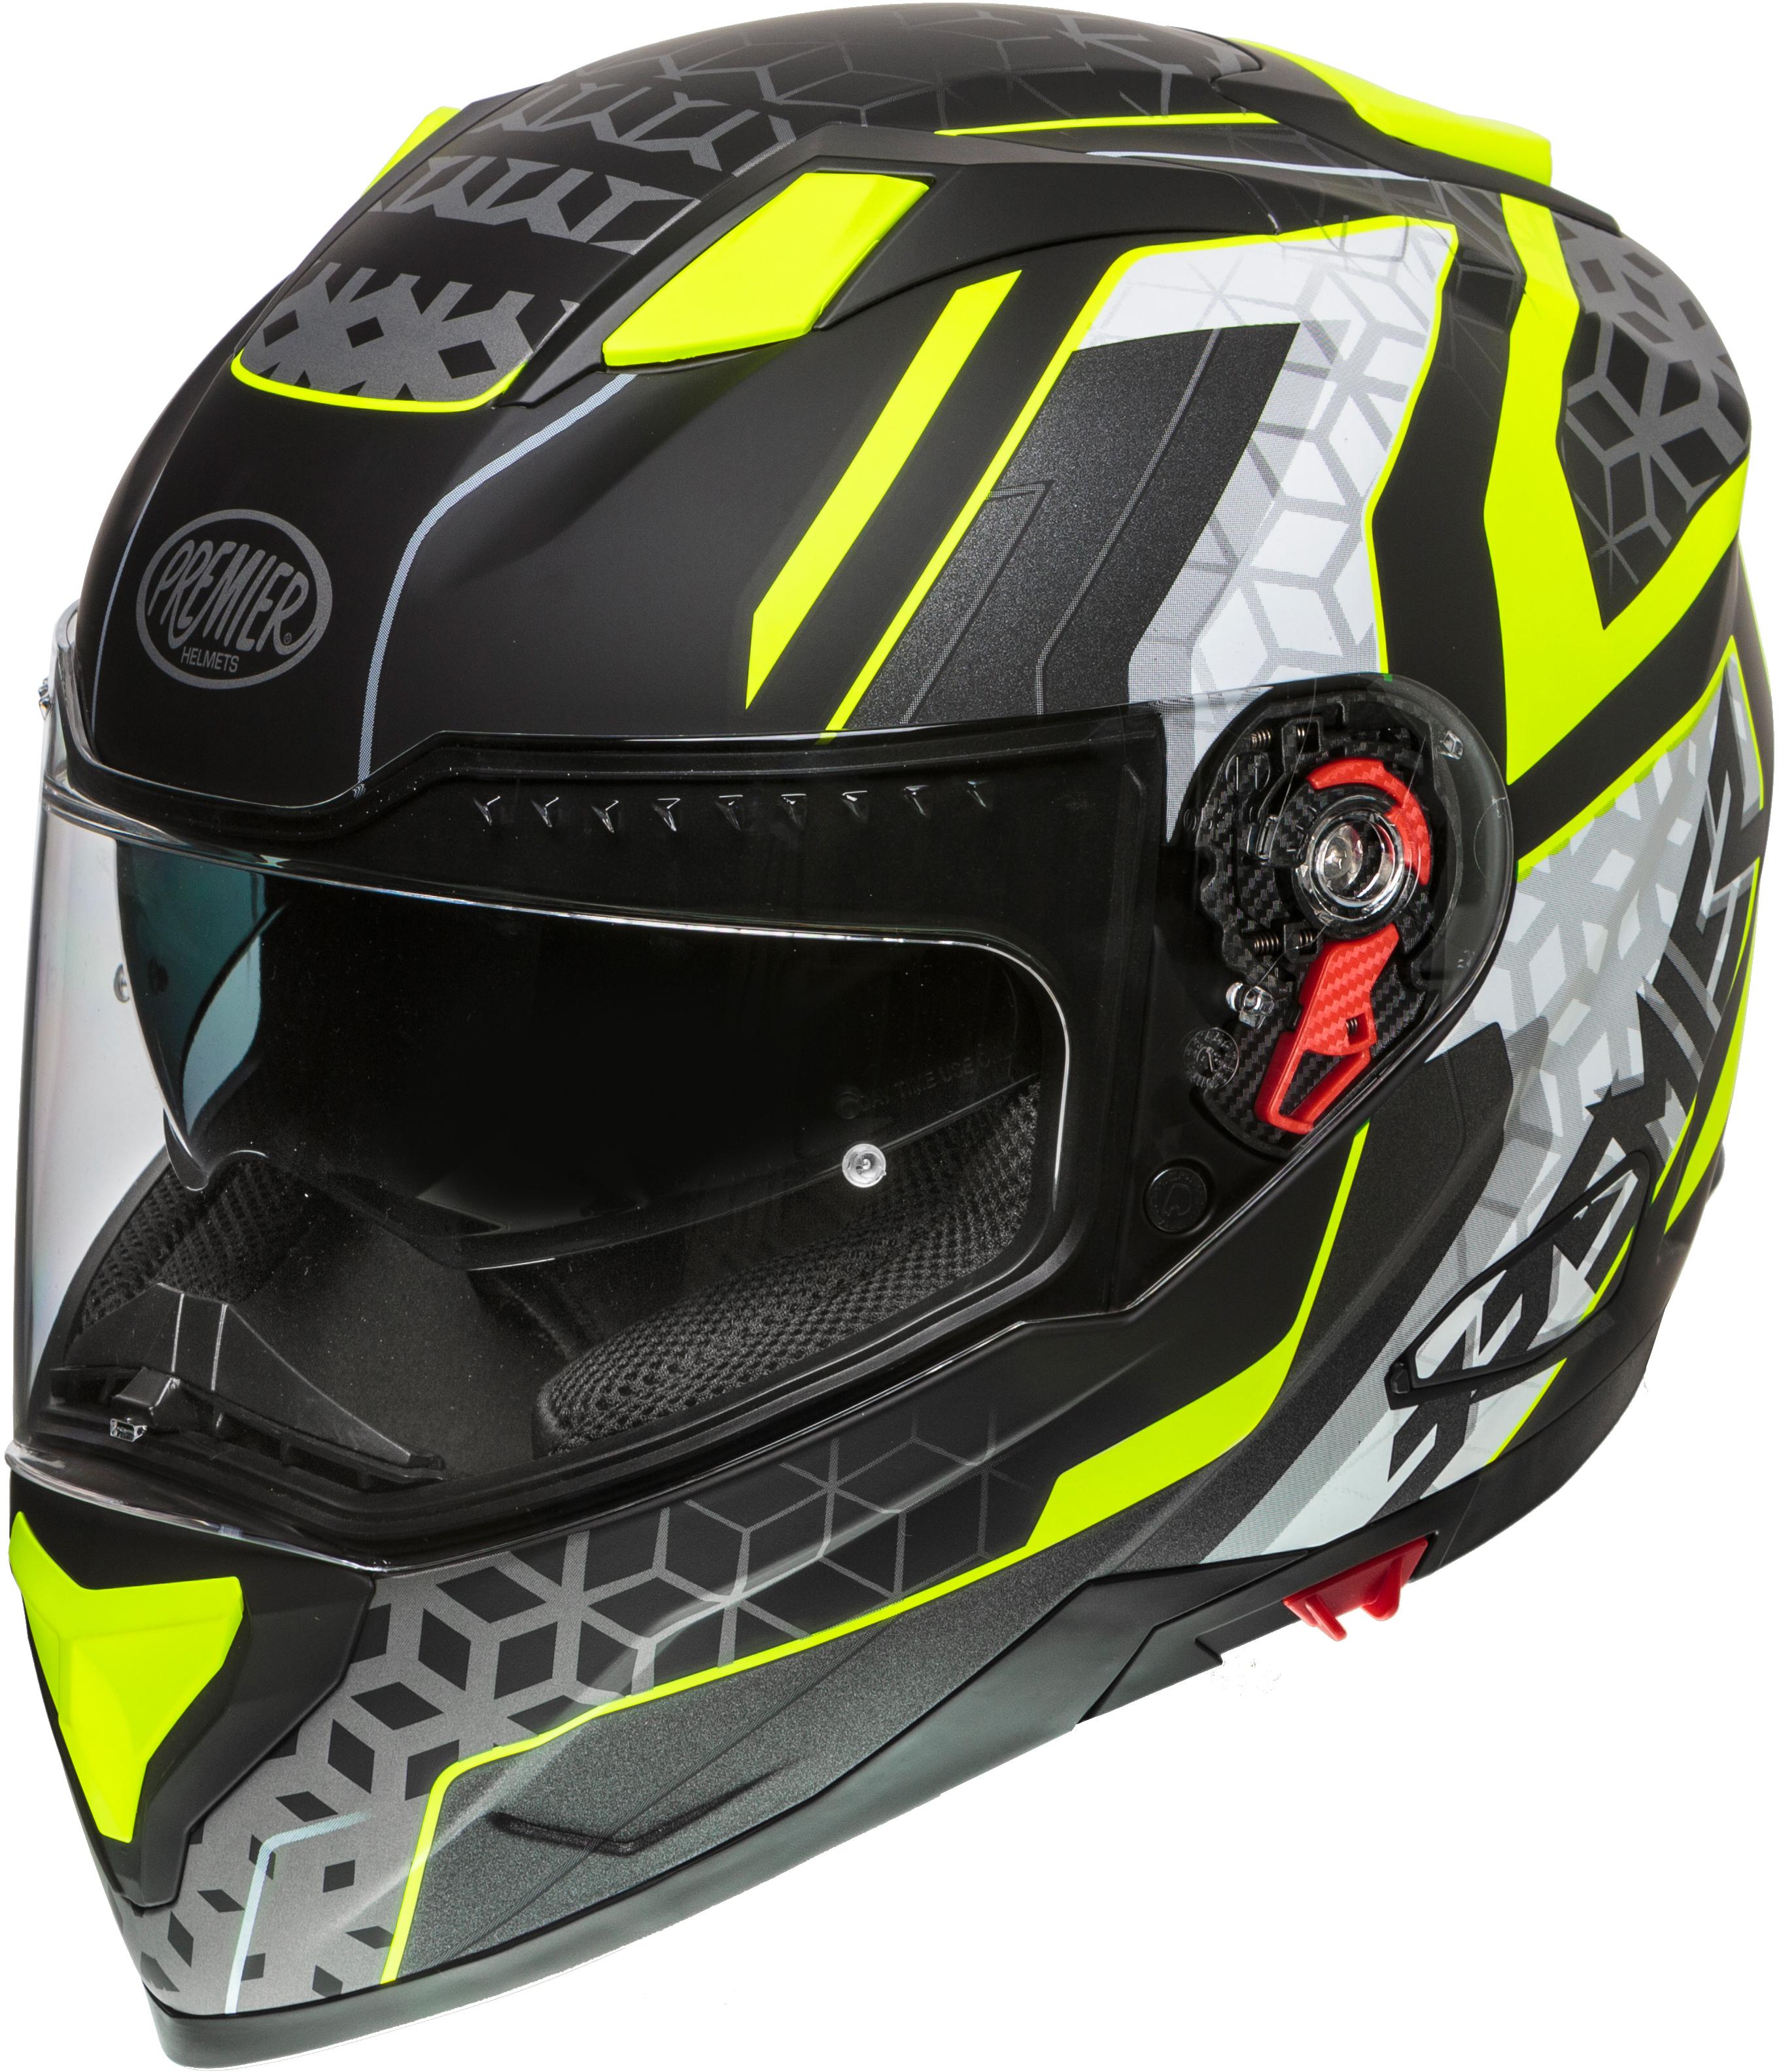 Premier Vyrus Helmet Black/Neon Medium